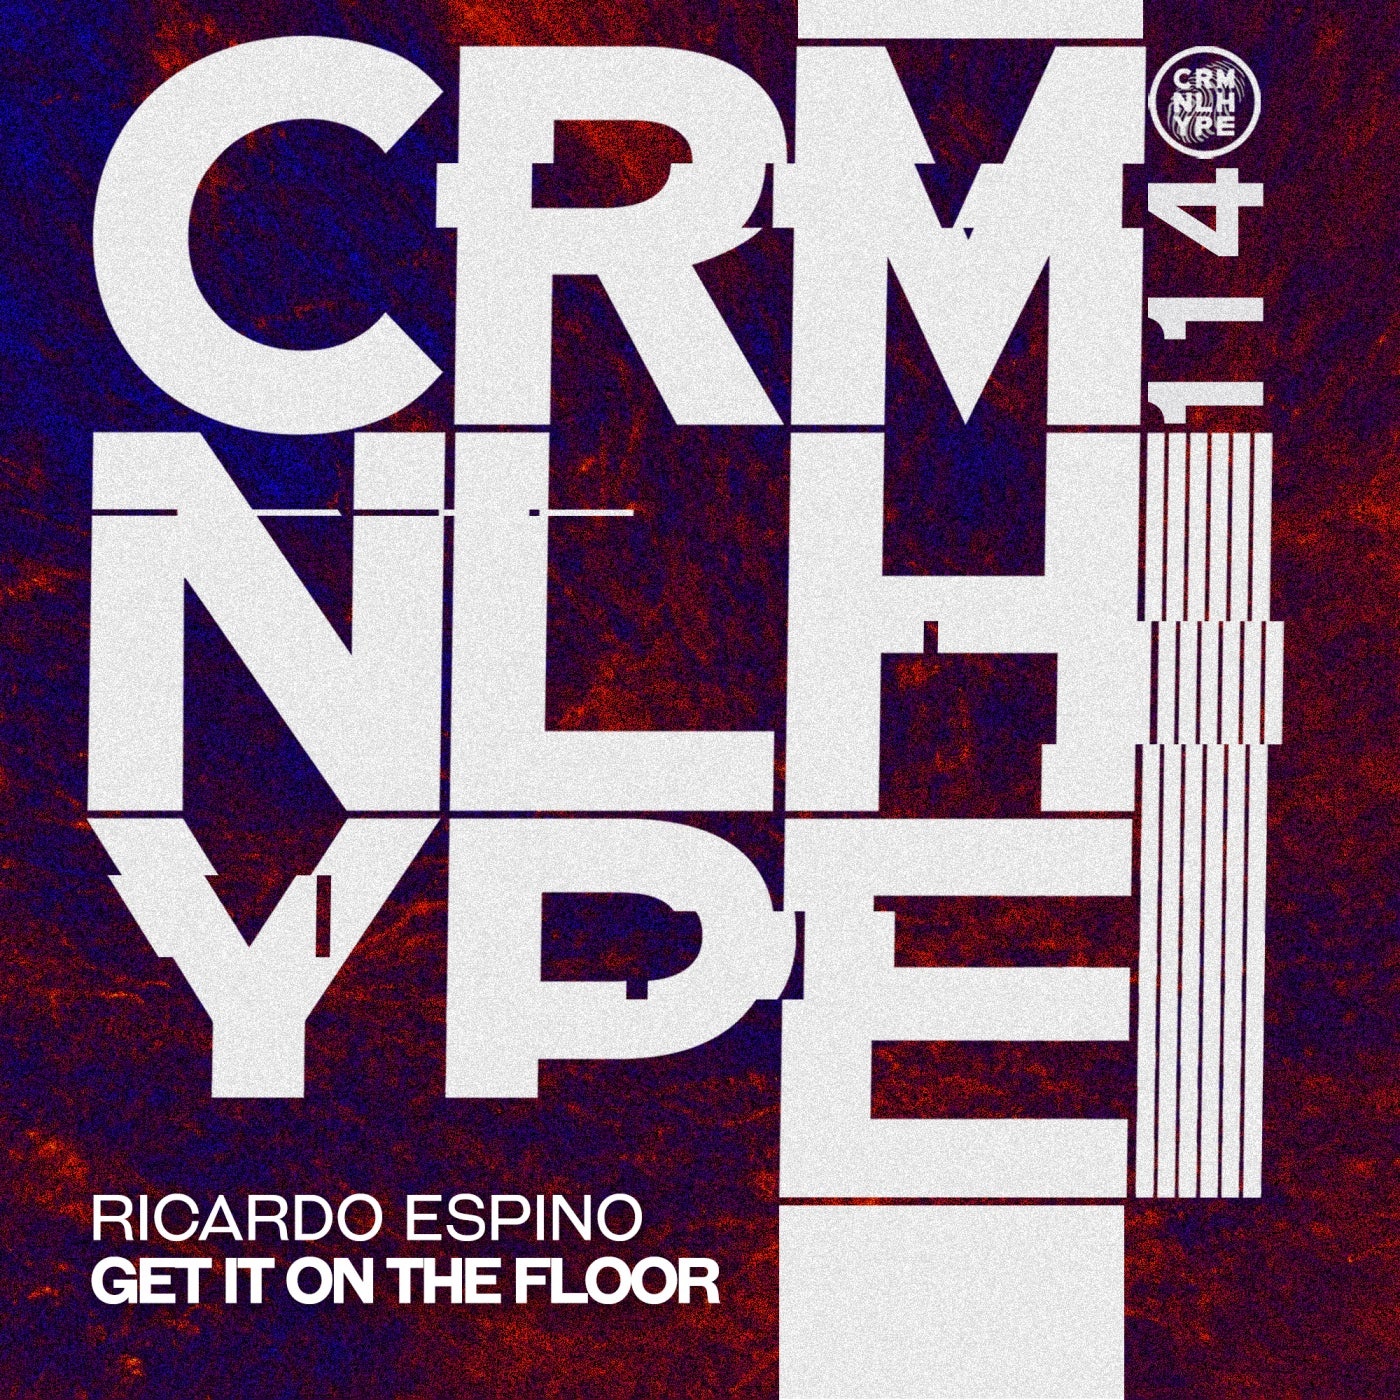 Ricardo Espino - Get It On The Floor [CHR114]